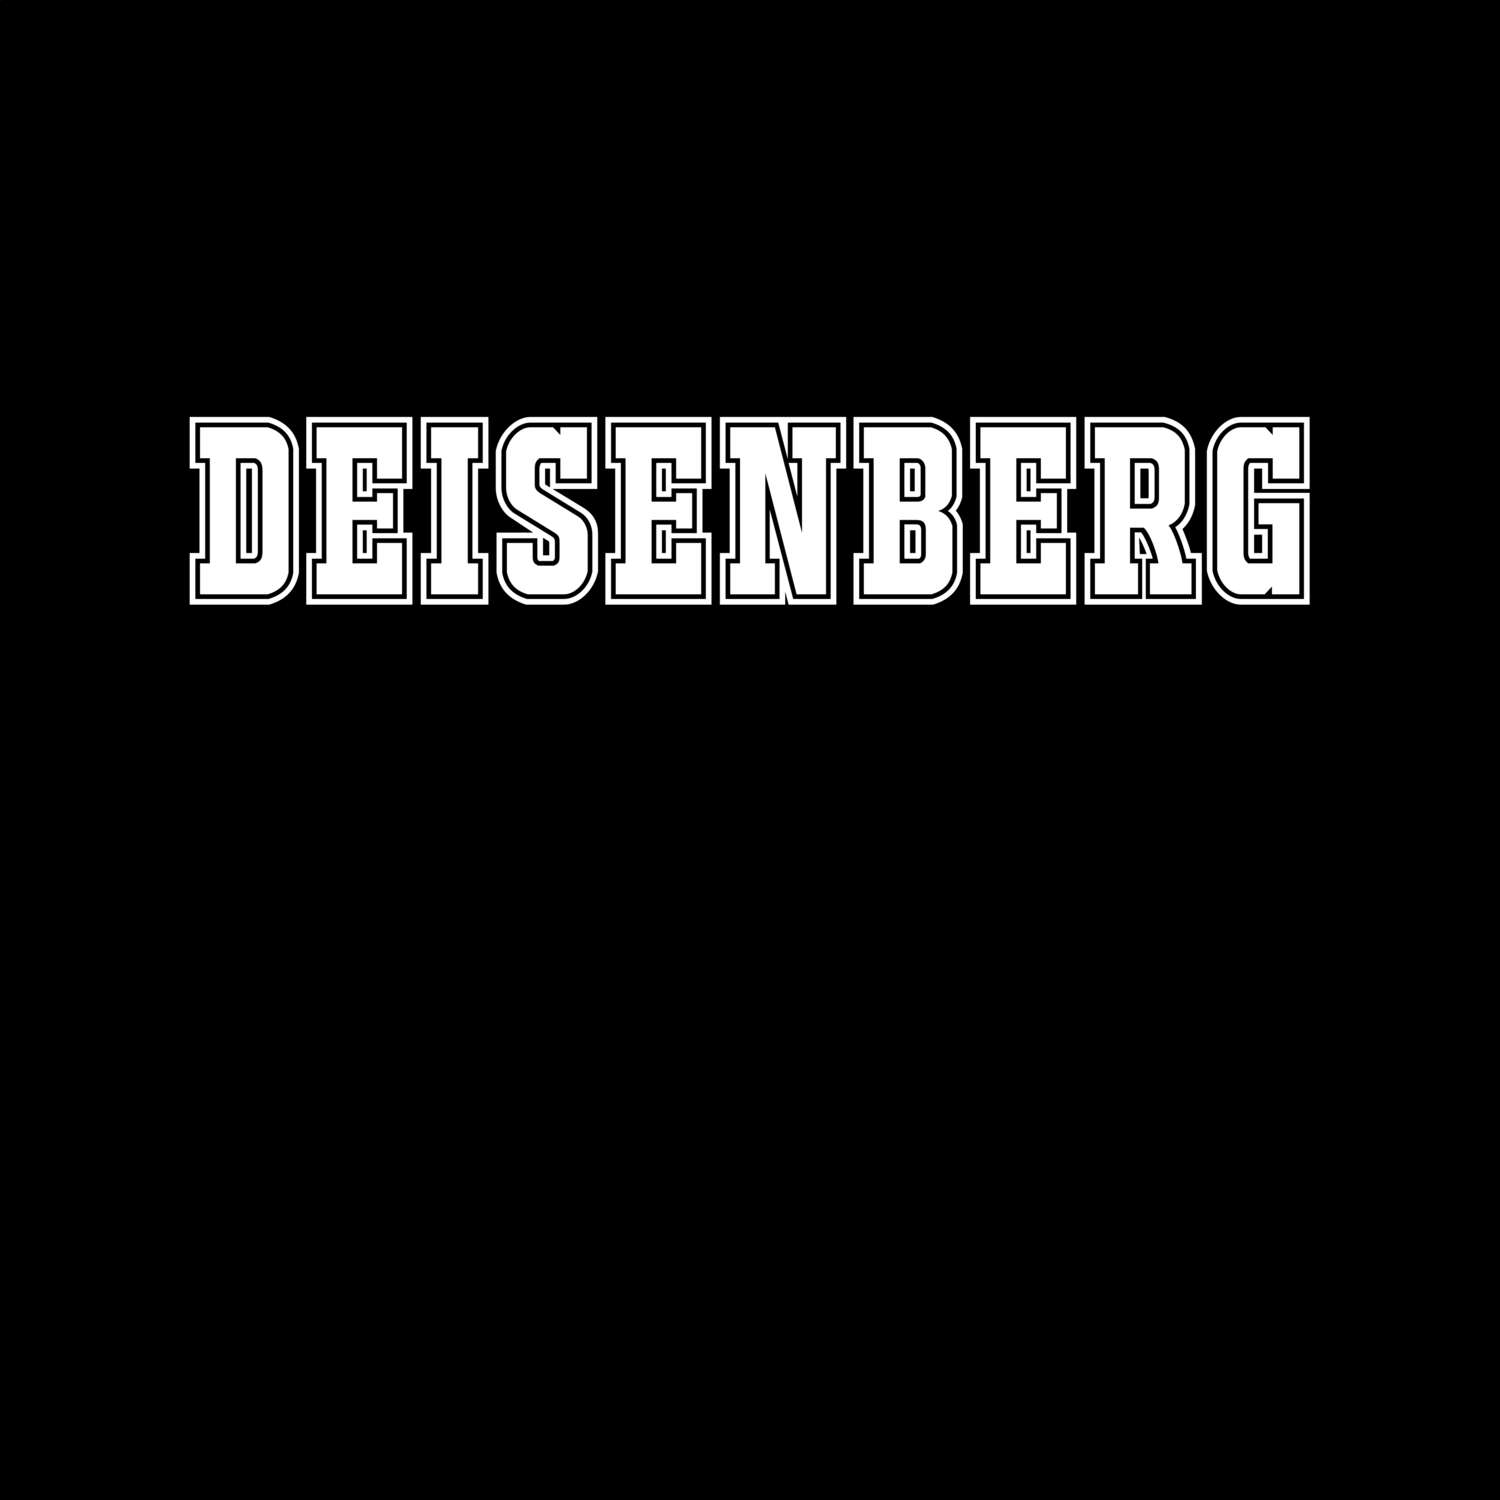 Deisenberg T-Shirt »Classic«